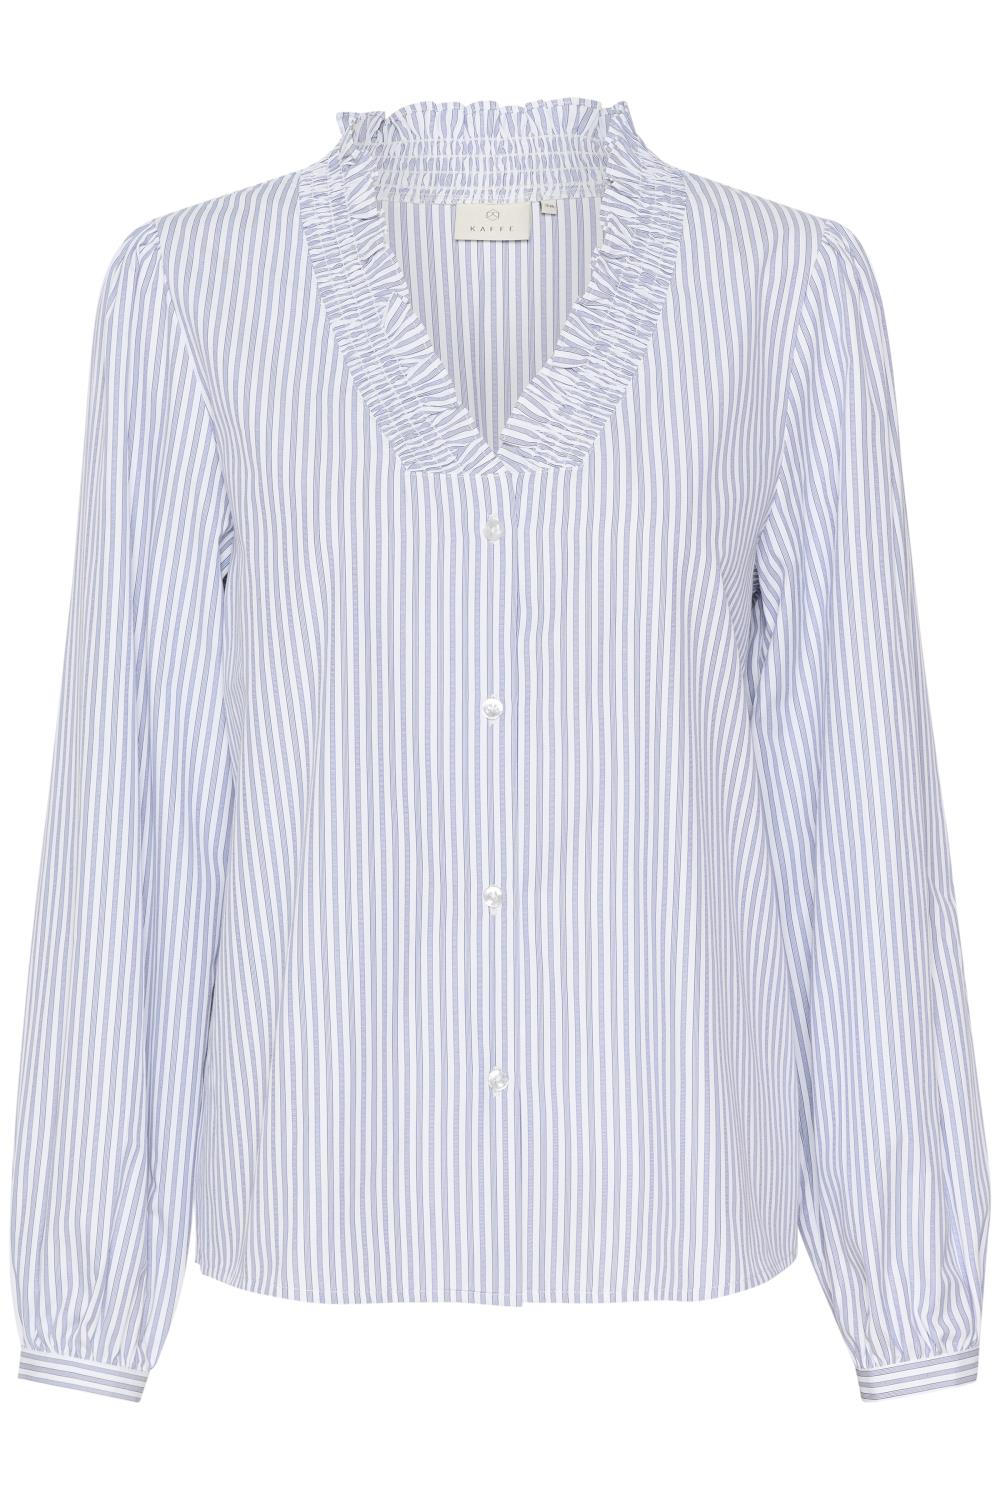 Kaffe KAmaibritt Shirt, skjortebluse, hvit/blå stripet